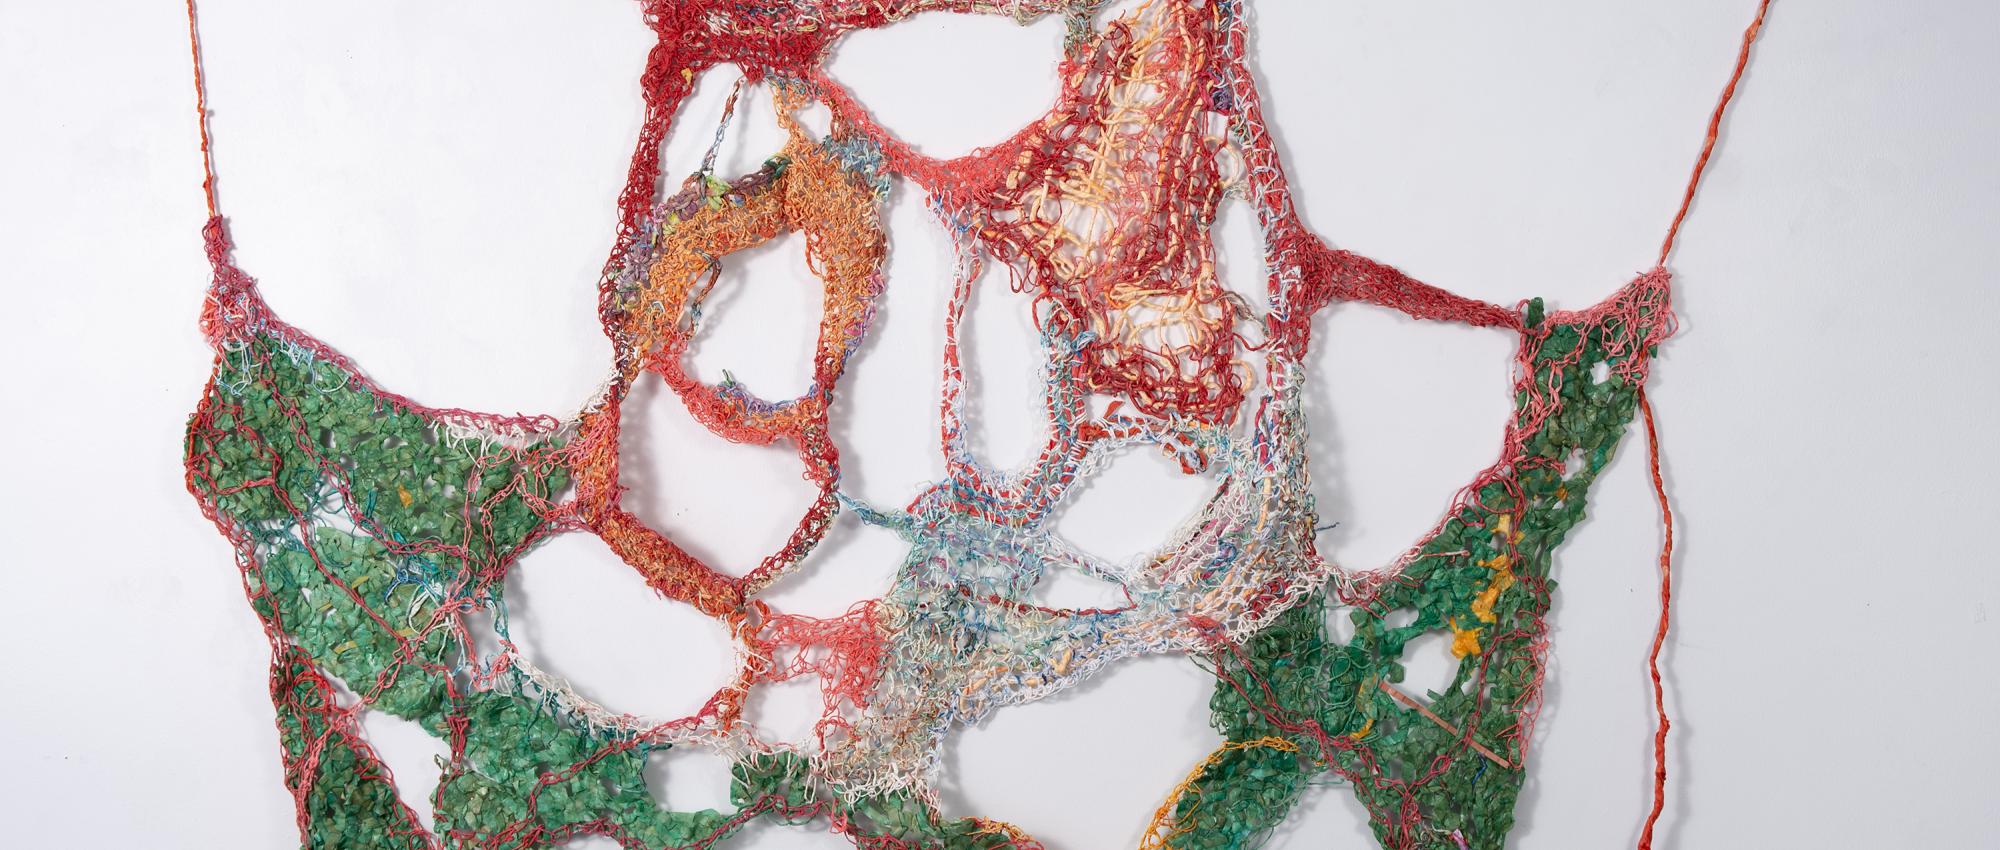 Net-like crocheted artwork made of handspun paper hung on a white wall